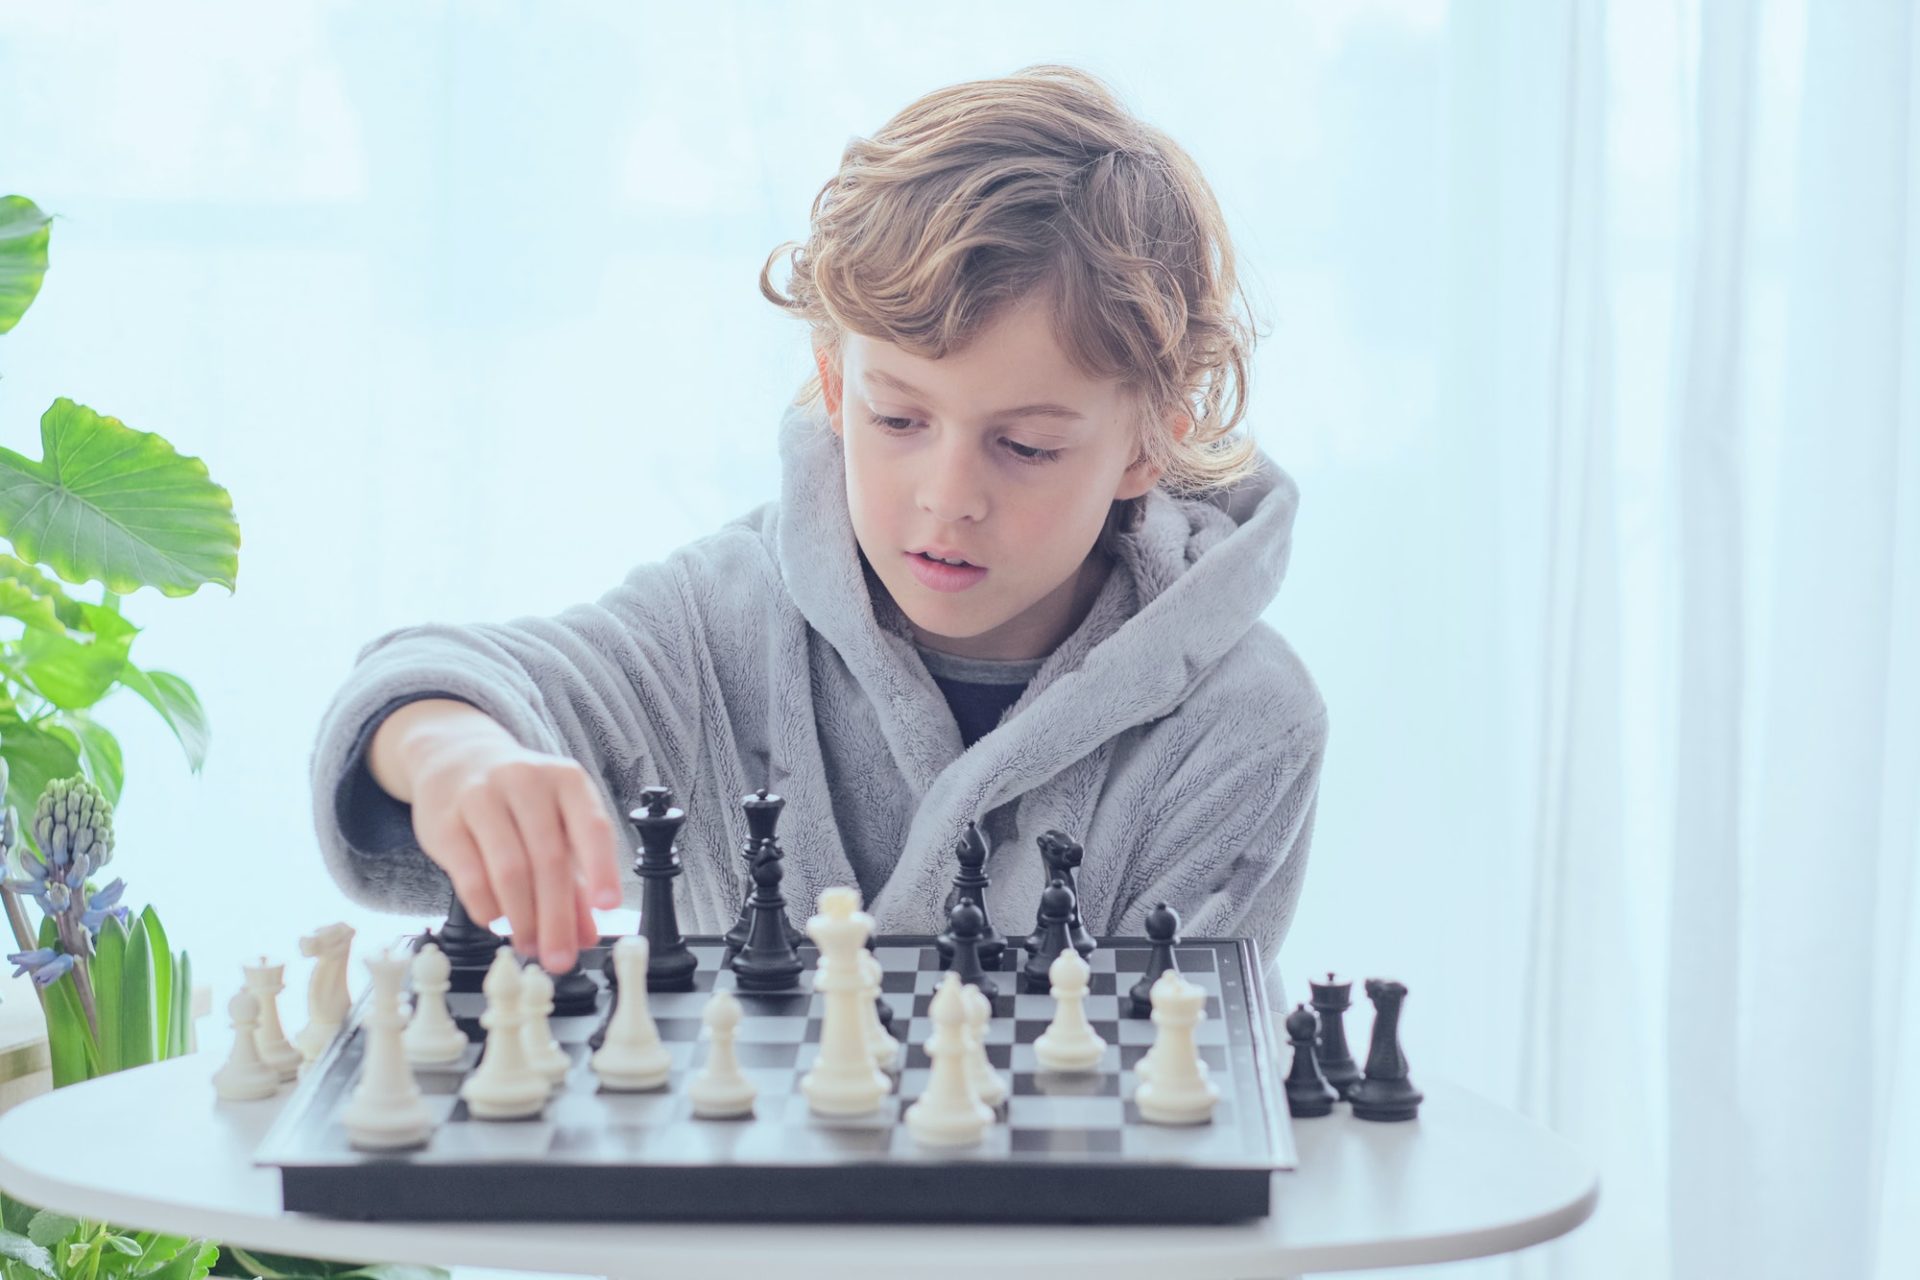 Boy holding figure on chess board